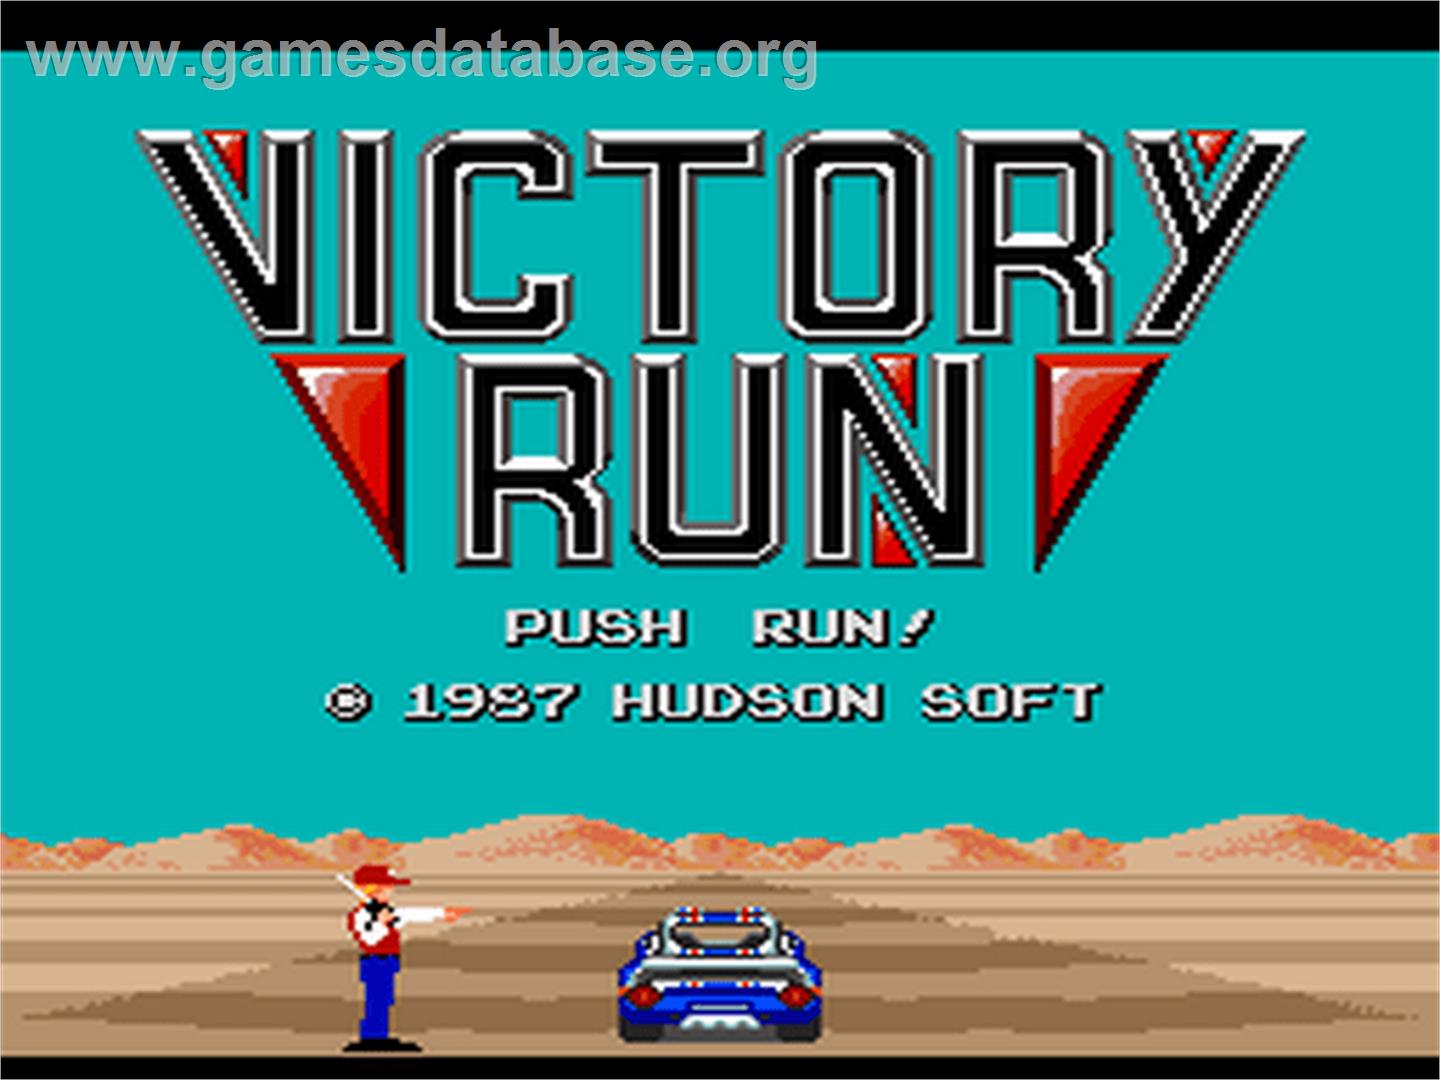 Victory Run - NEC PC Engine - Artwork - Title Screen